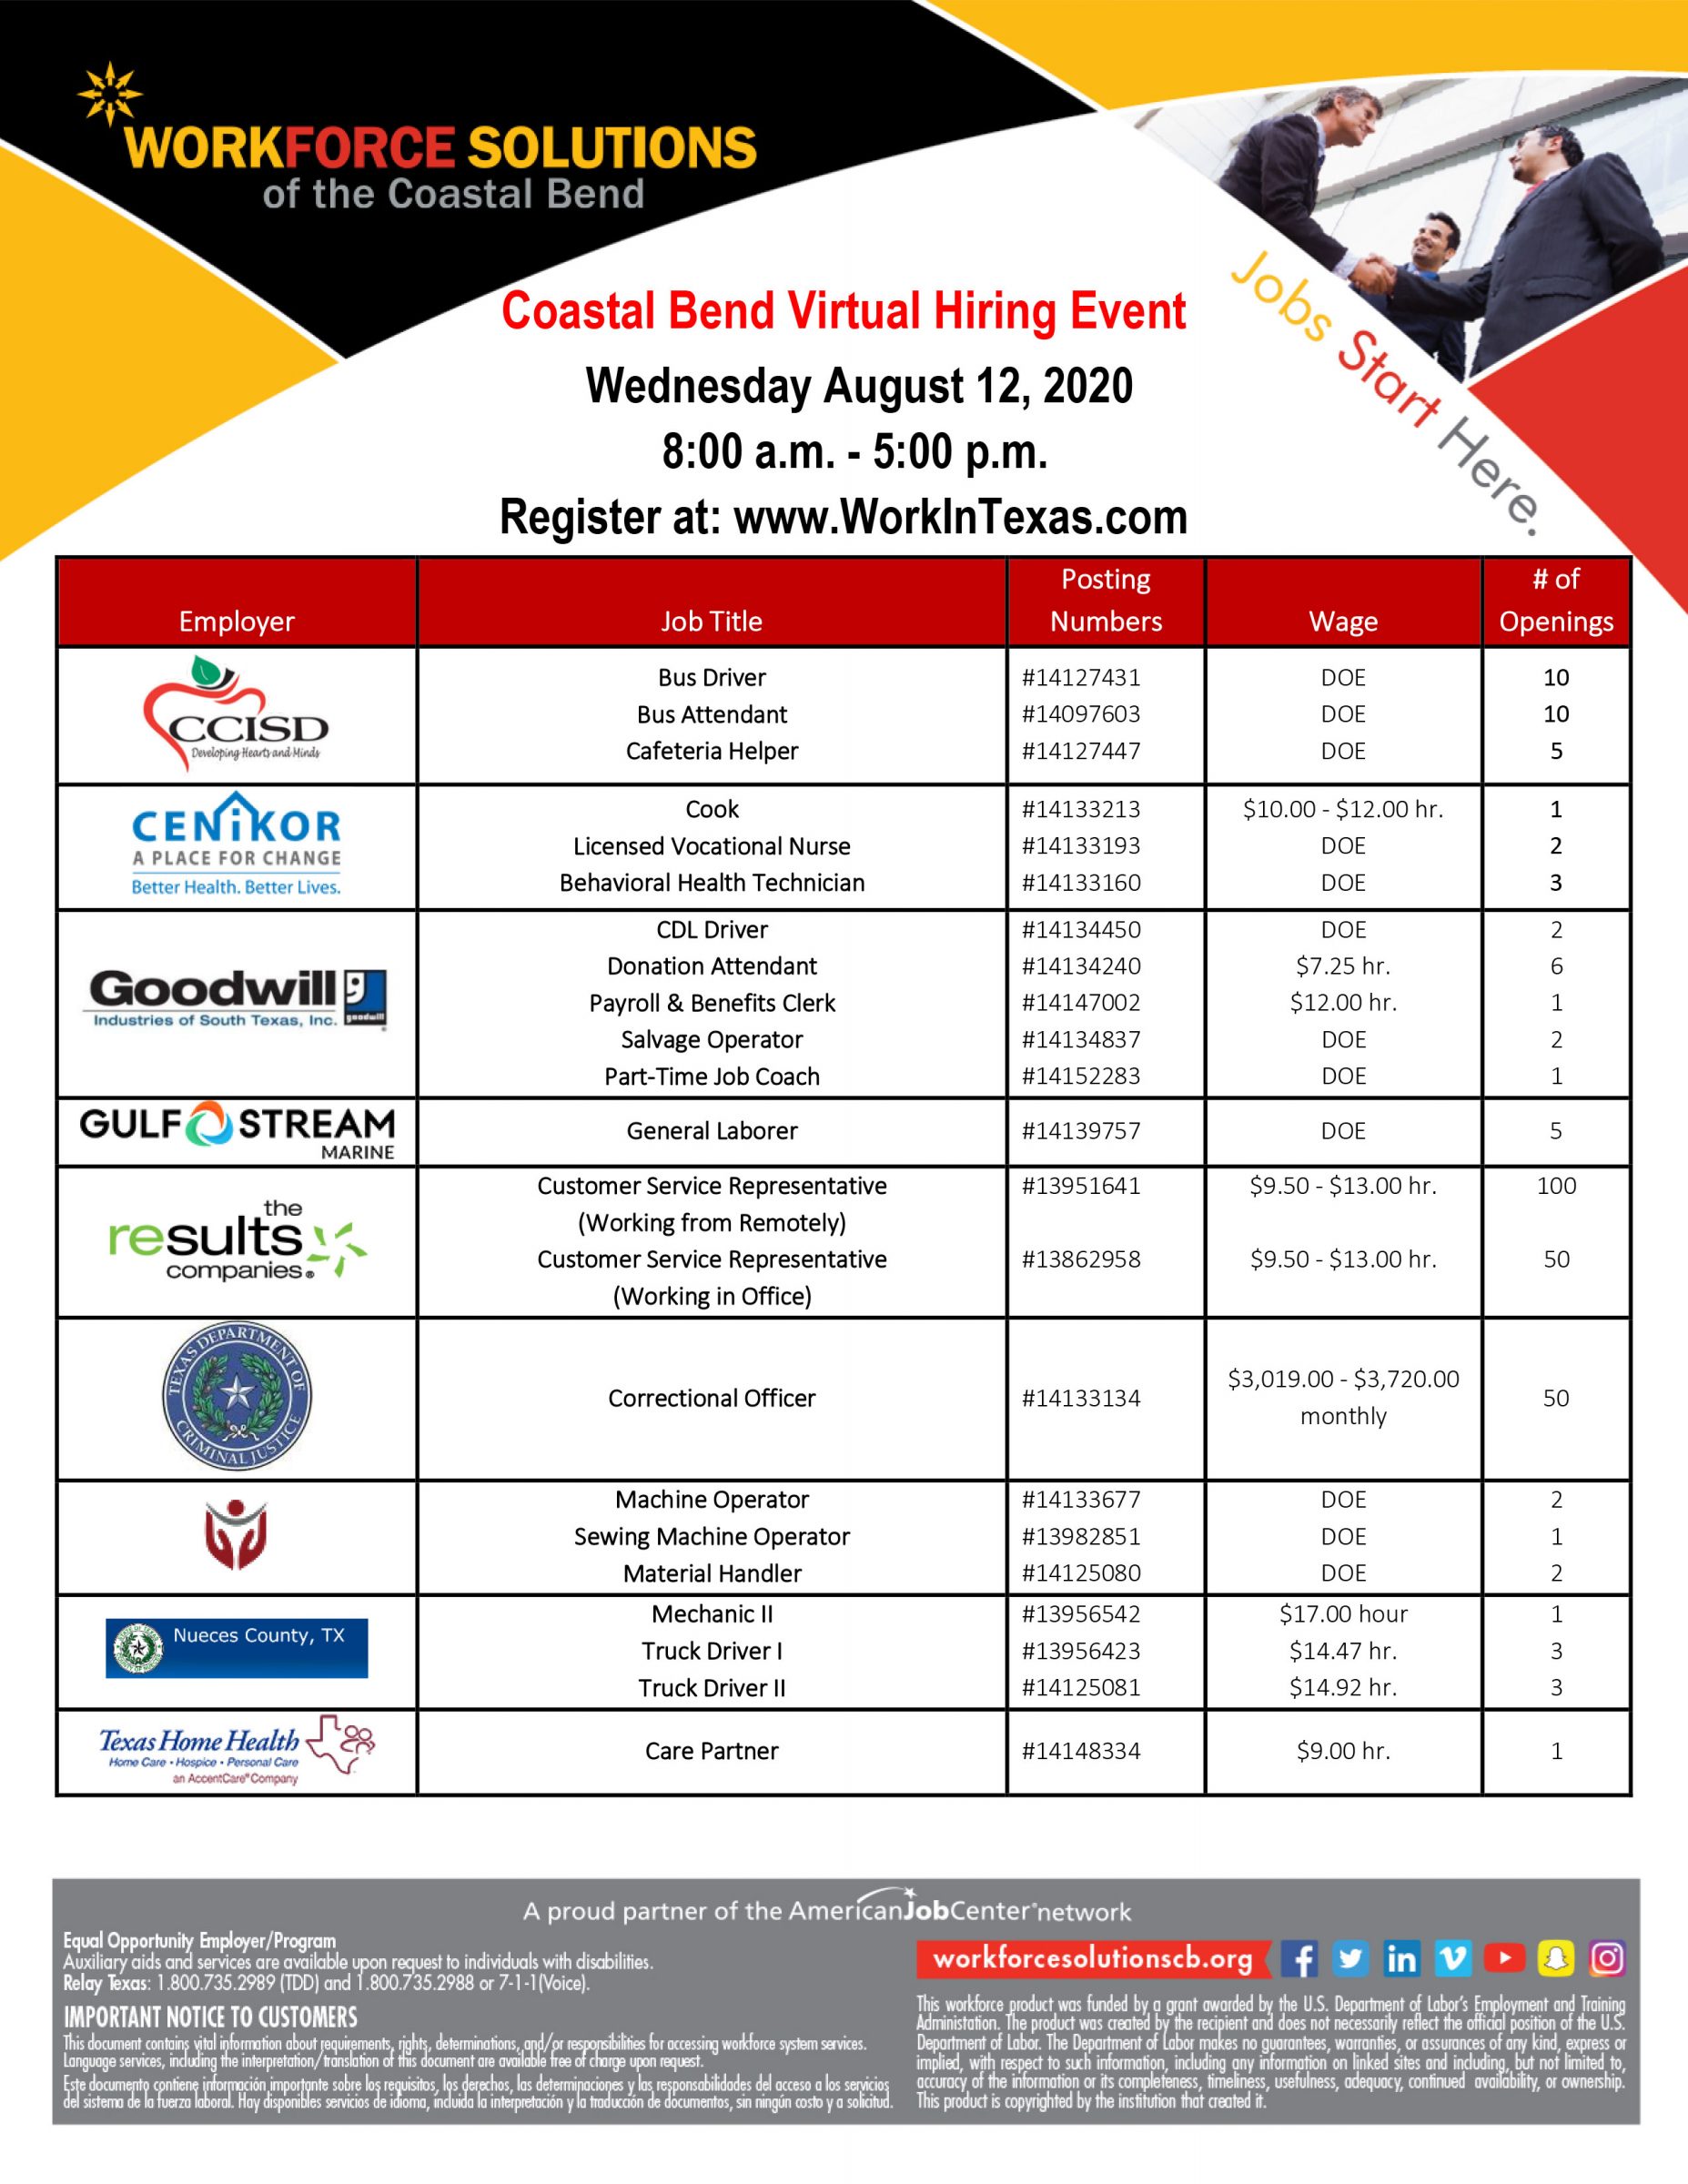 Register at workintexas.com for the Coastal bend Virtual Hiring Event on Wednesday, April 12, 2020, 8:00 A.M. - 5:00 P.M.